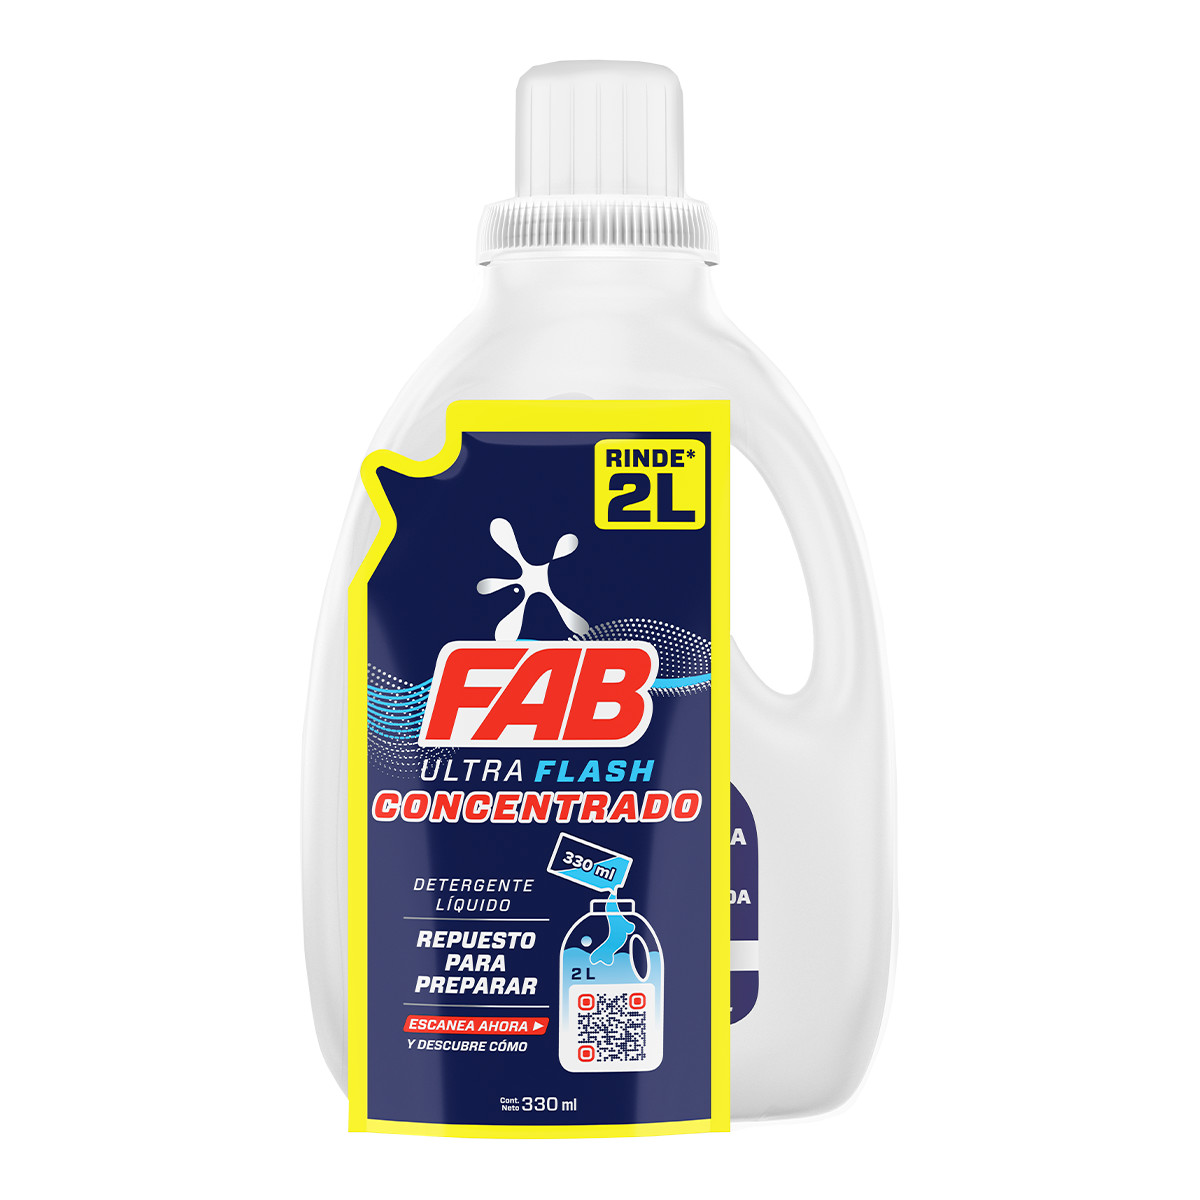 FAB Ultra Flash Concentrado para preparar + Botella (Kit para preparar)